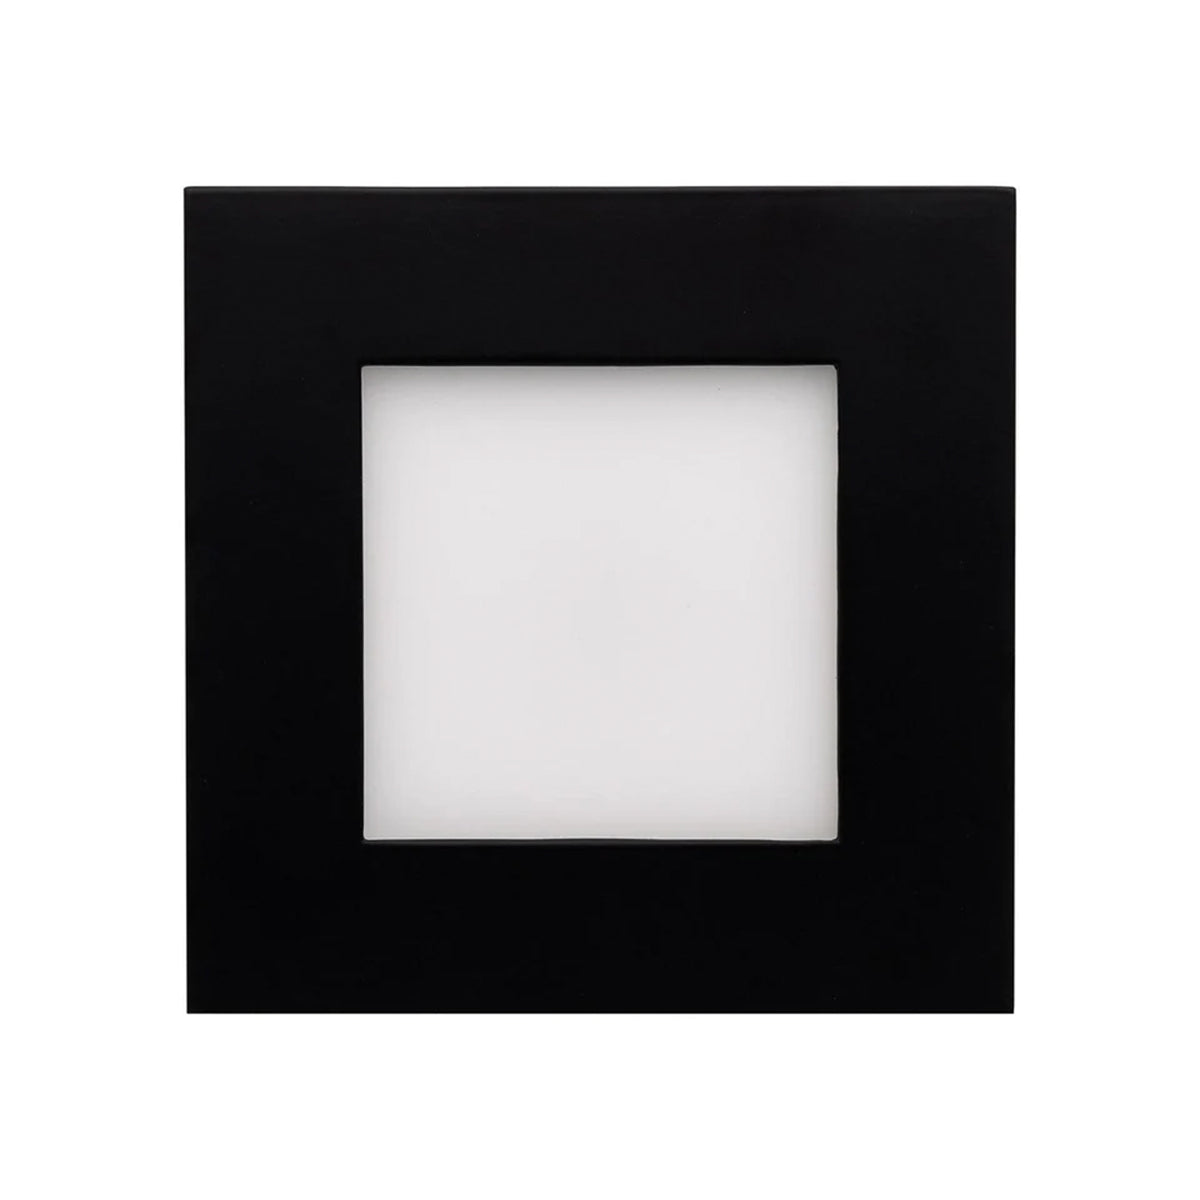 Slim Fit Canless LED Recessed Light, 4 inch, Edge-Lit, Square, 10 Watt, 650 Lumens, Selectable CCT, 2700K to 5000K, Black Finish